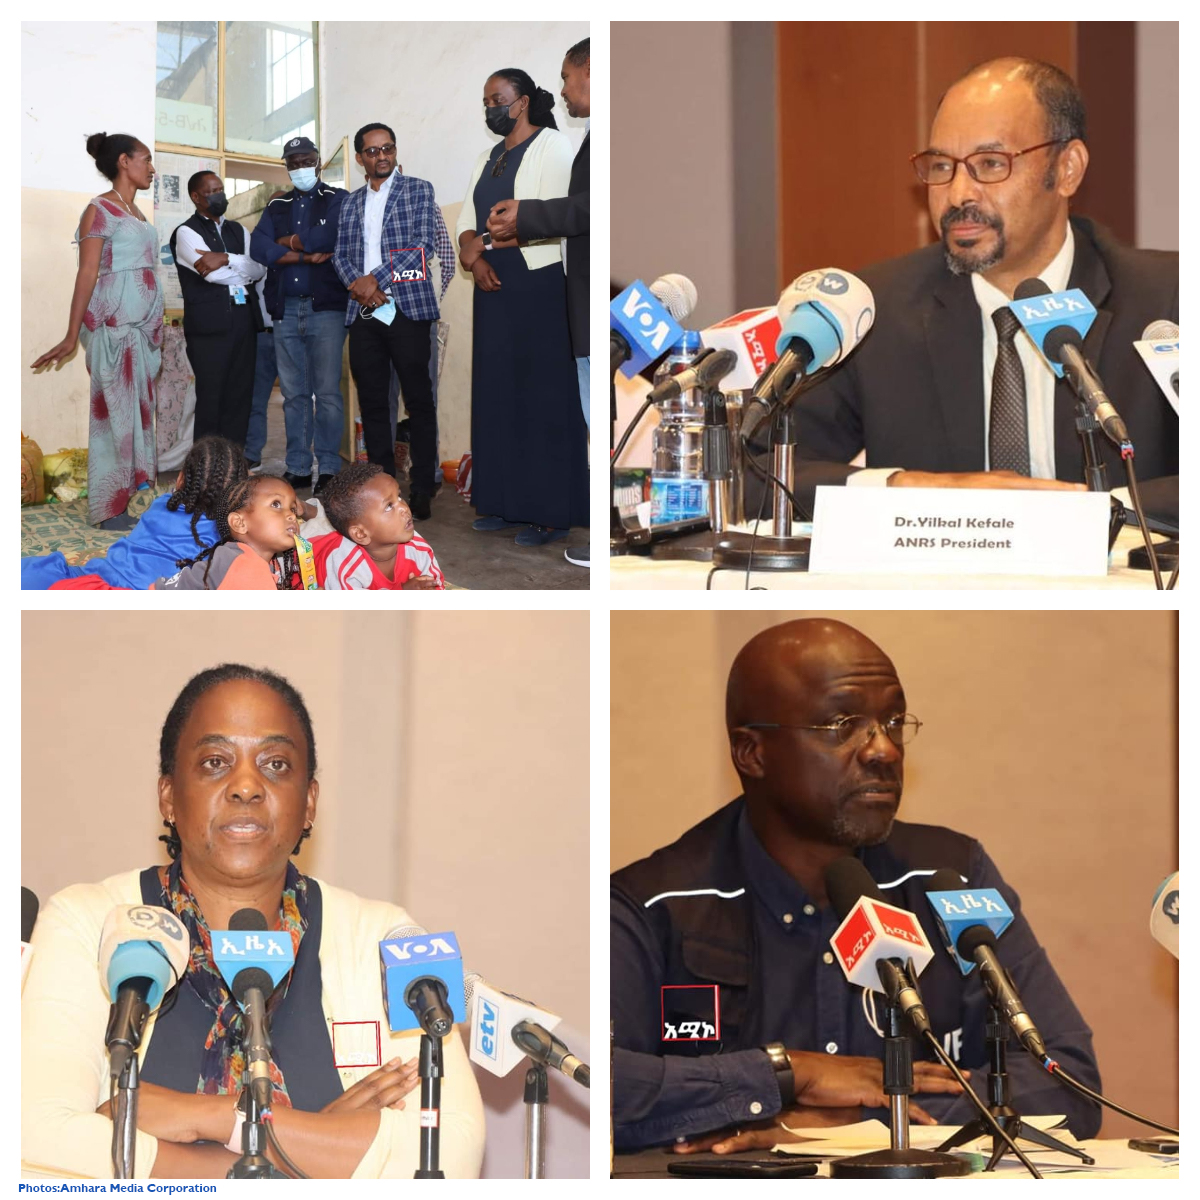 UN leadership in Ethiopia visits IDPs in Amhara Region